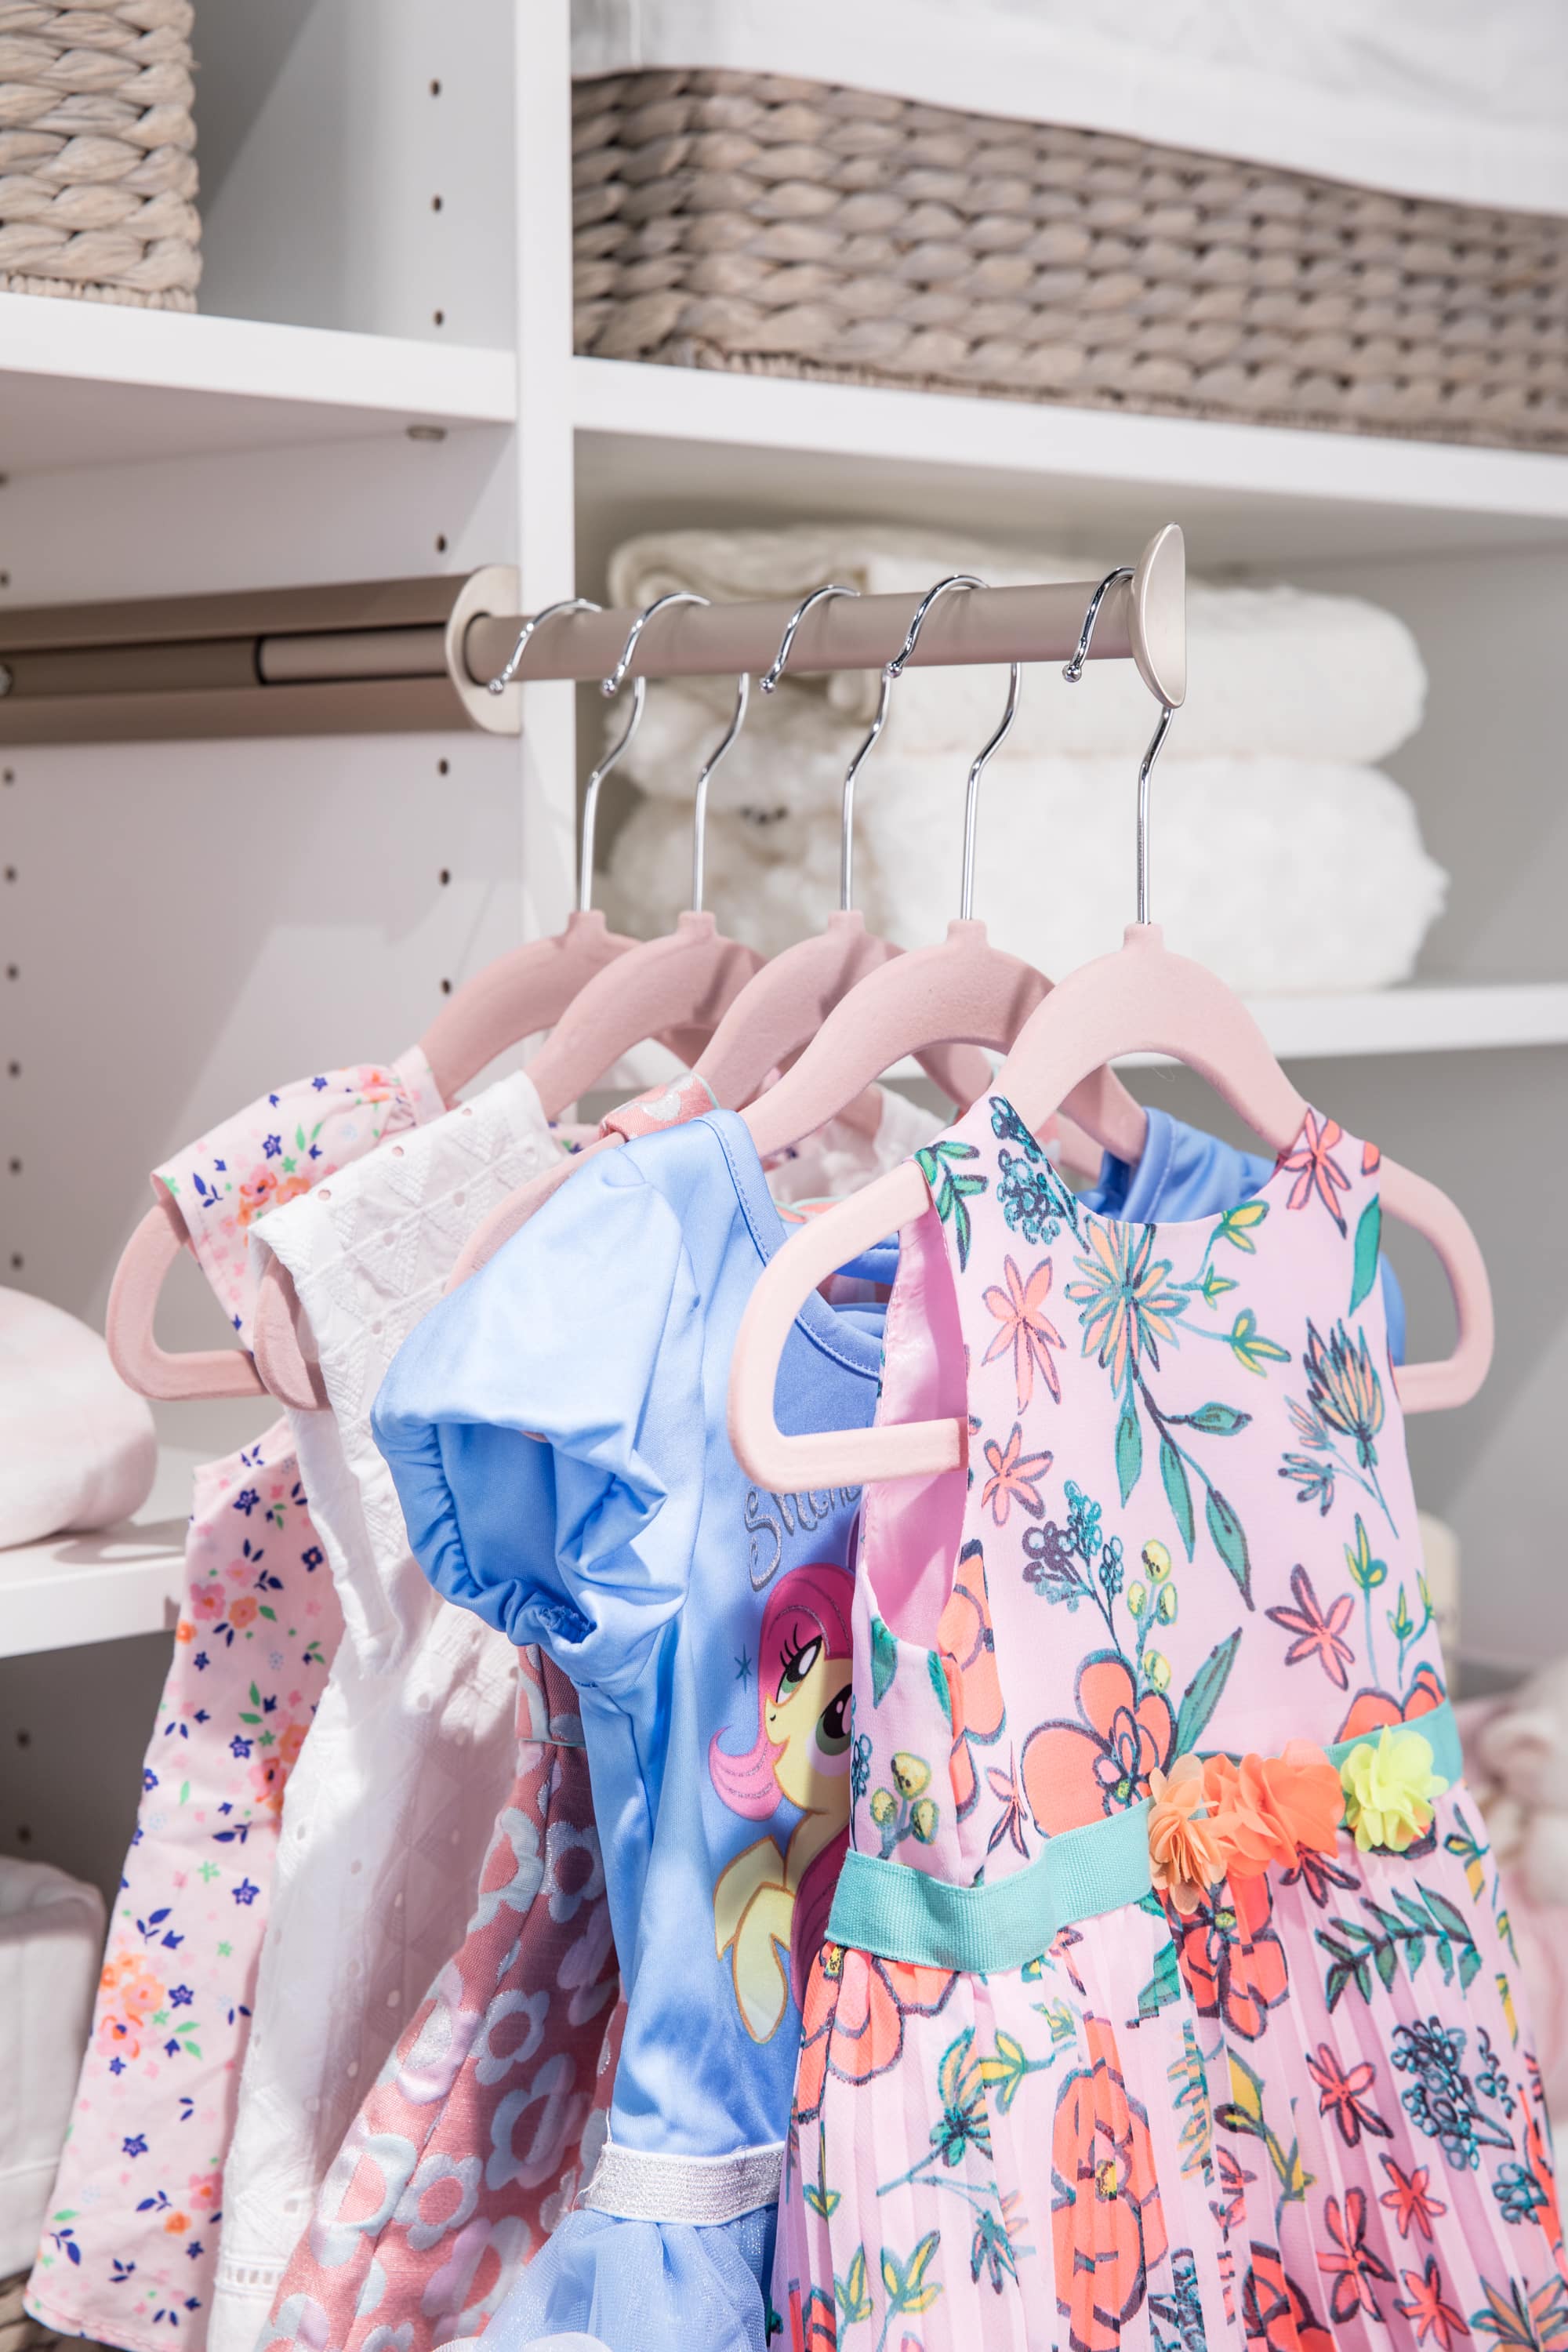 Girls clothing hung on clothing rack